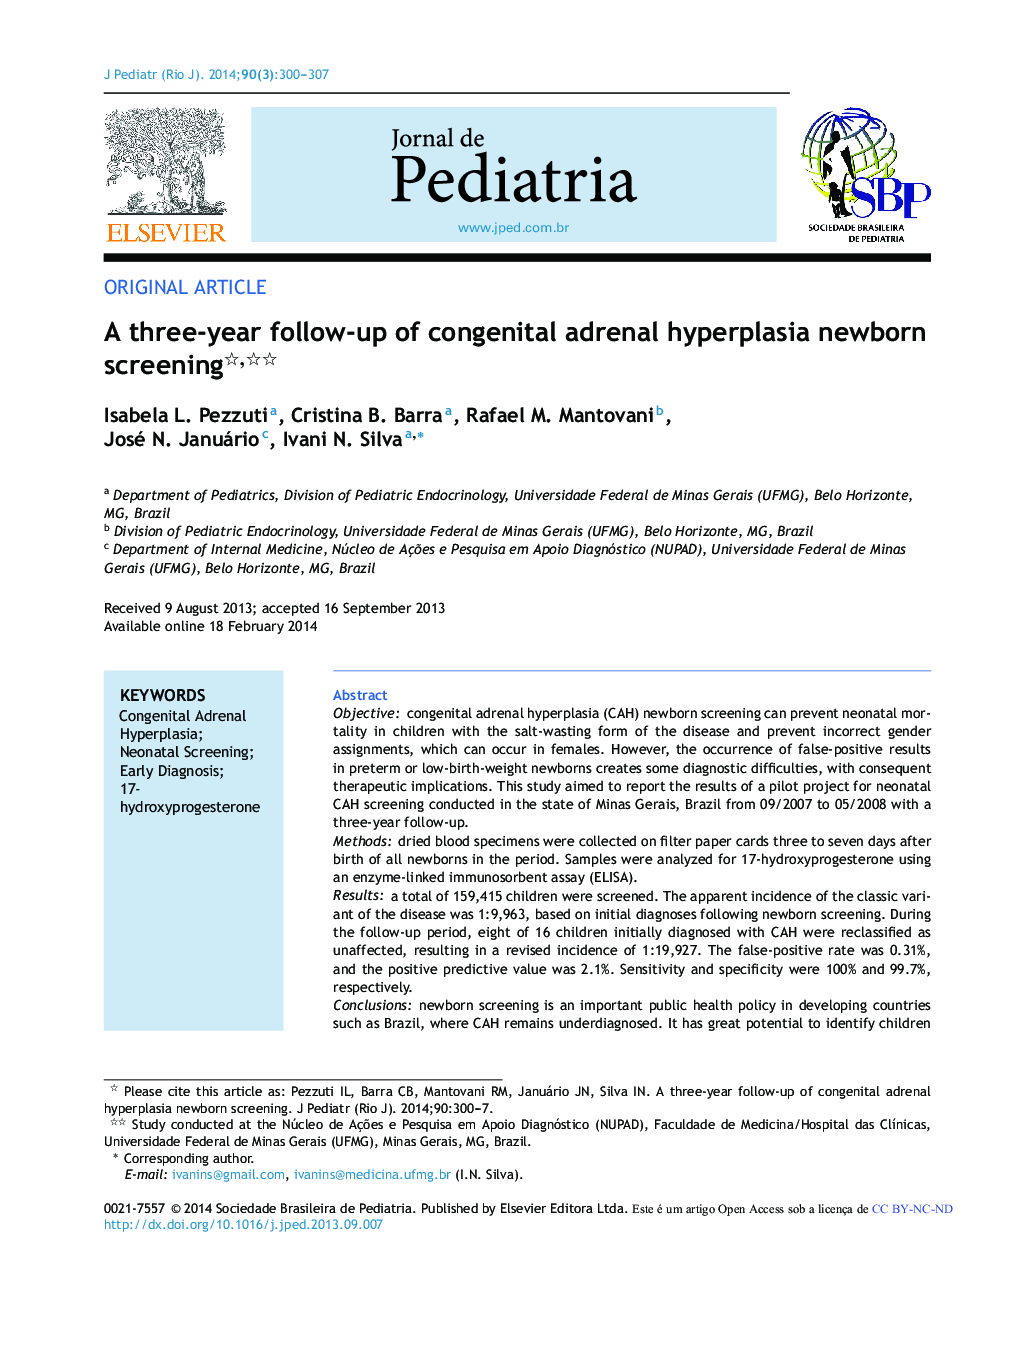 A three-year follow-up of congenital adrenal hyperplasia newborn screening 